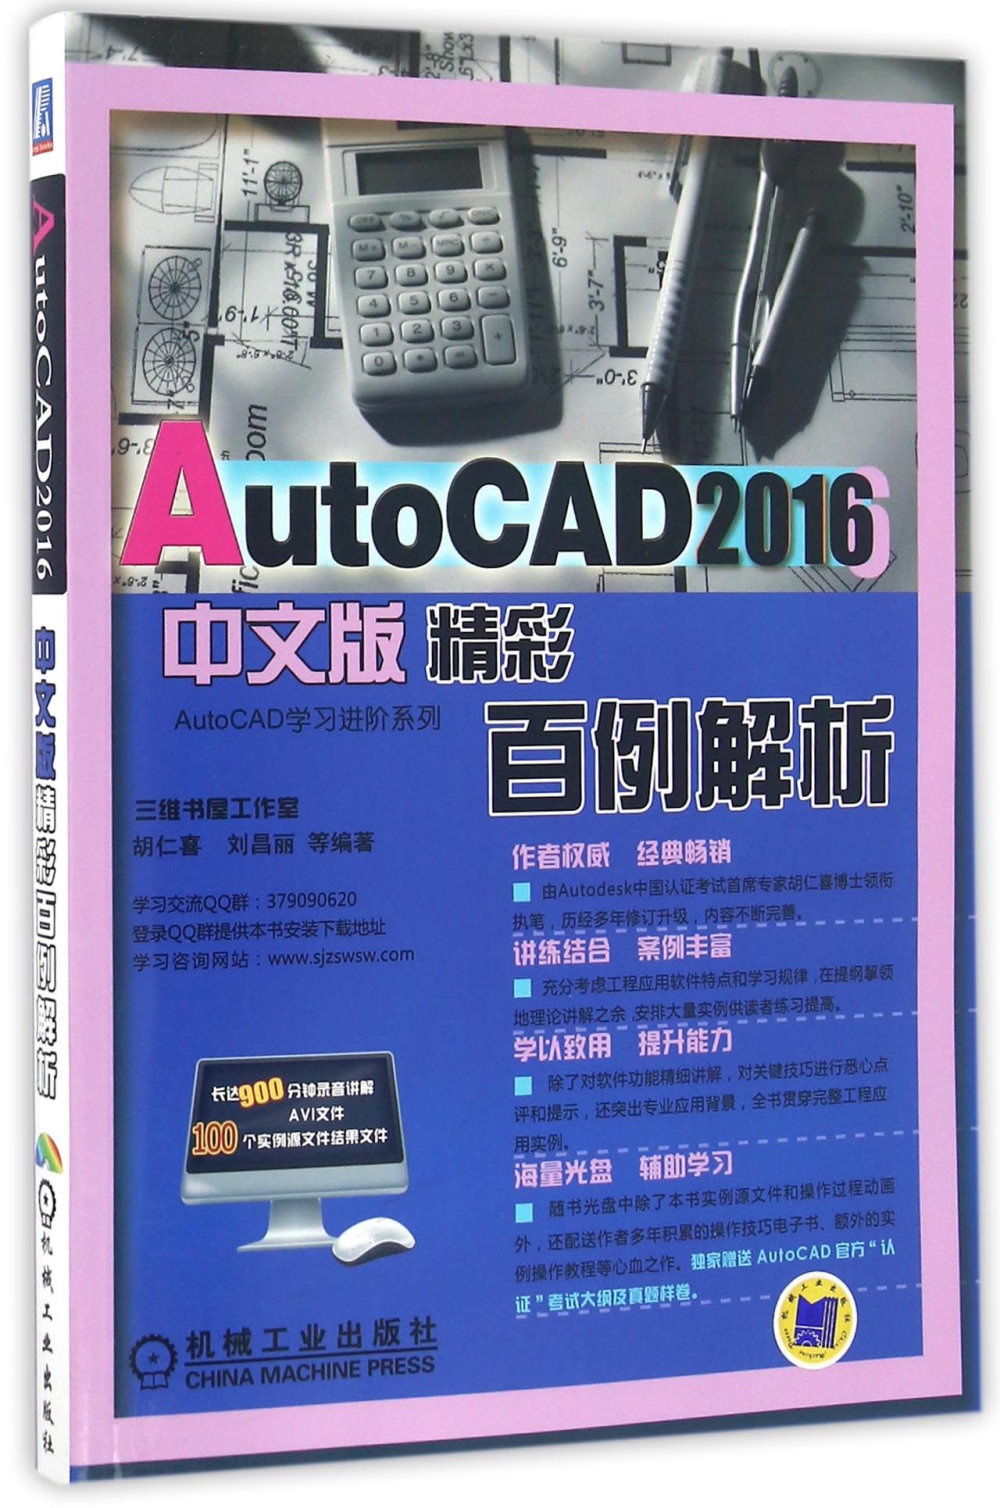 AutoCAD 2016中文版精彩百例解析